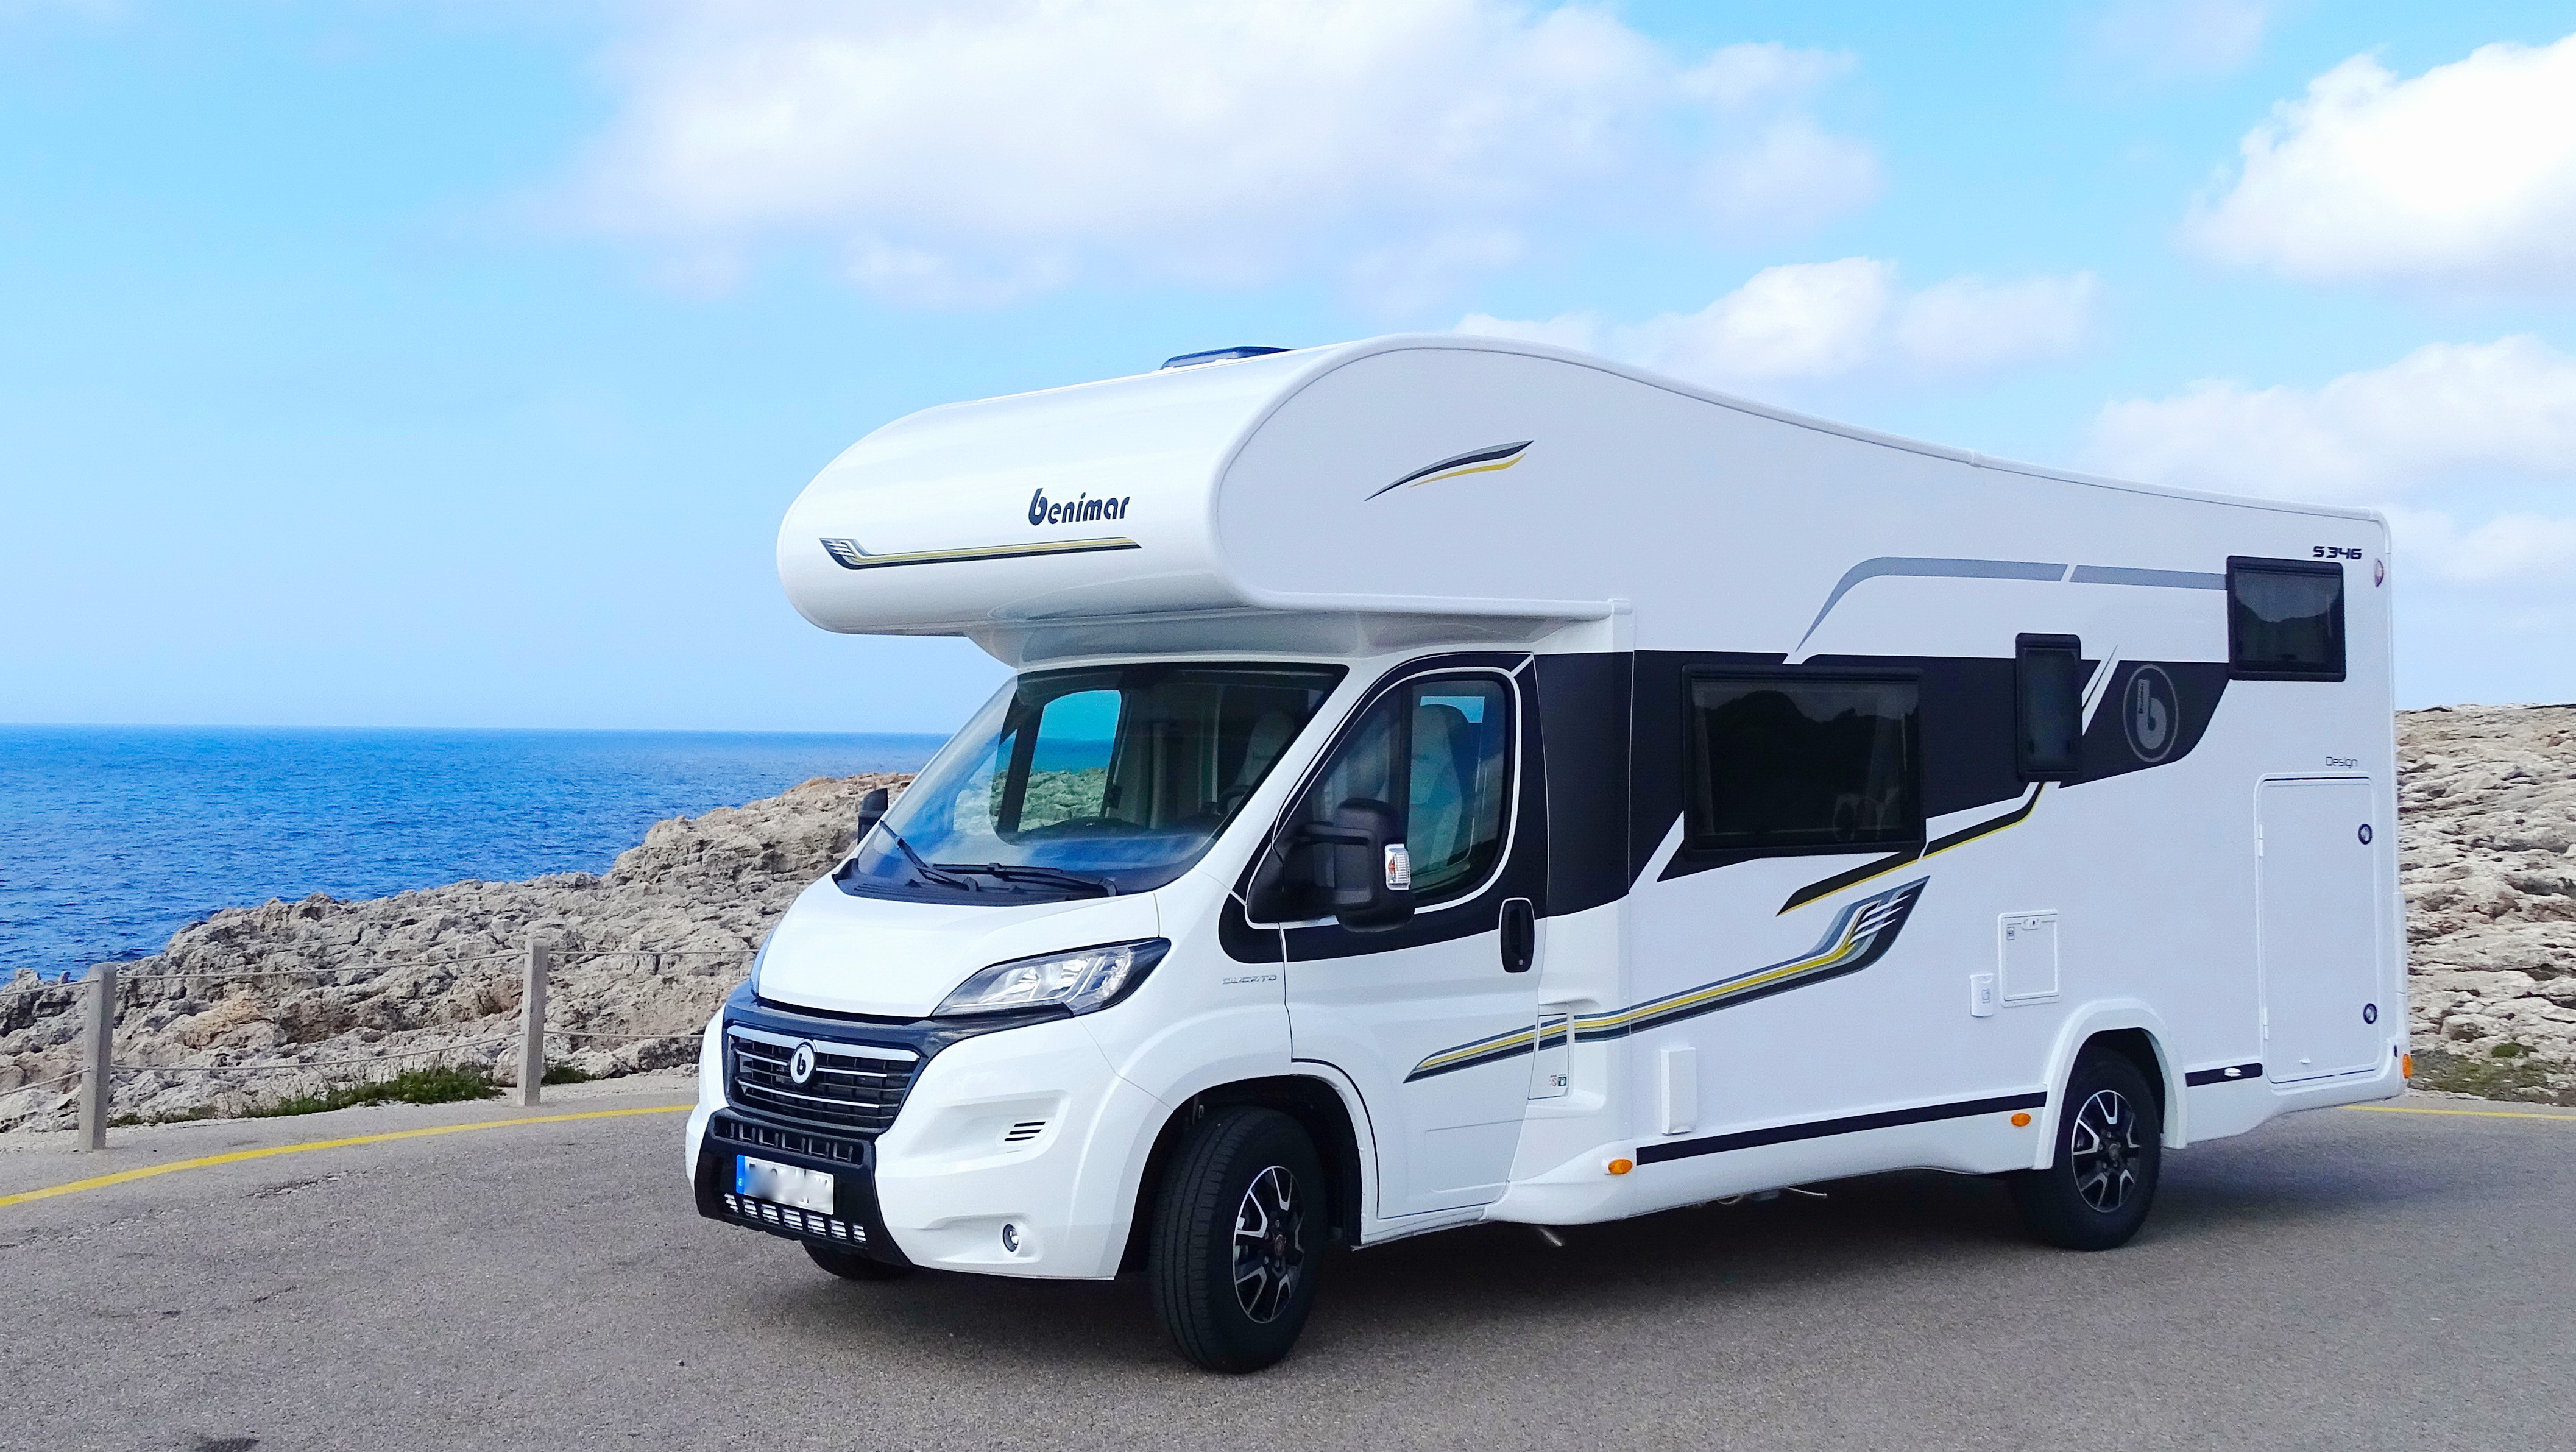 Alquiler caravanas Menorca